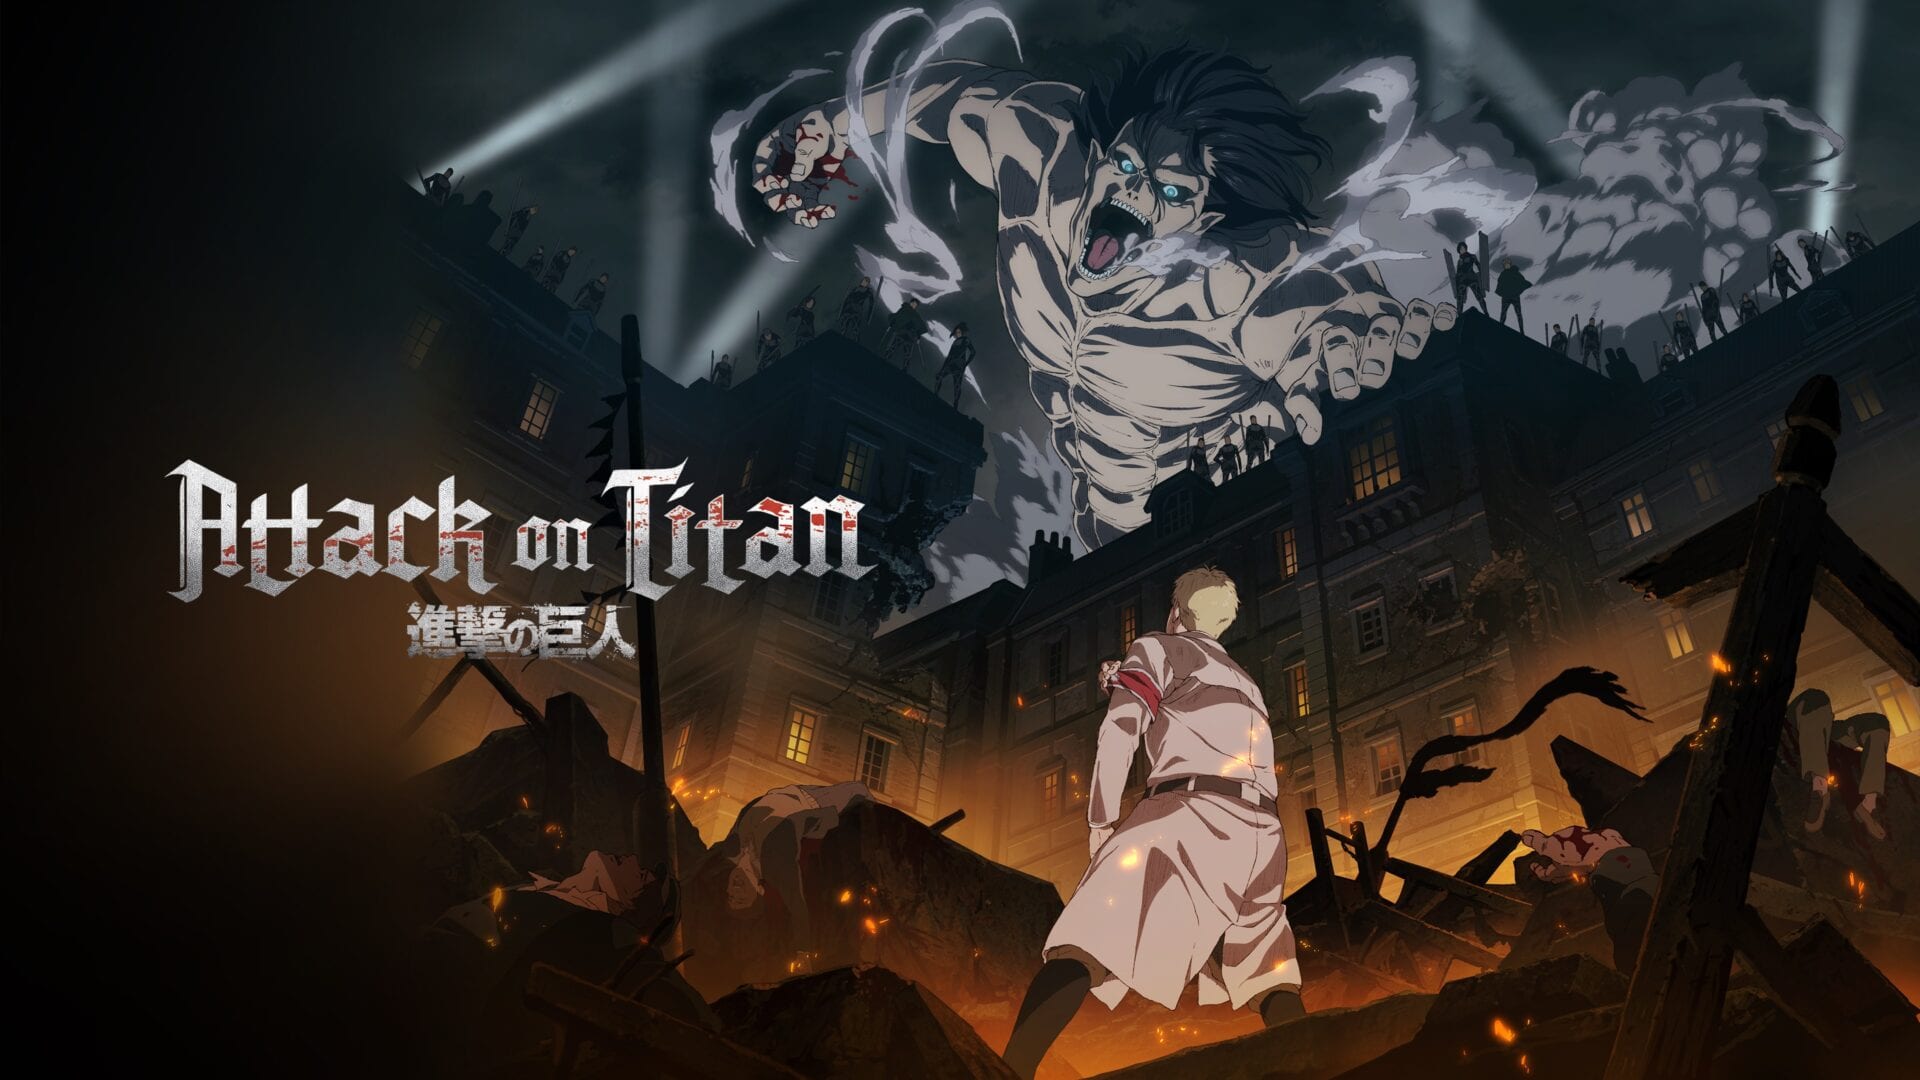 Attack on Titan Final Season Part 2 Announced